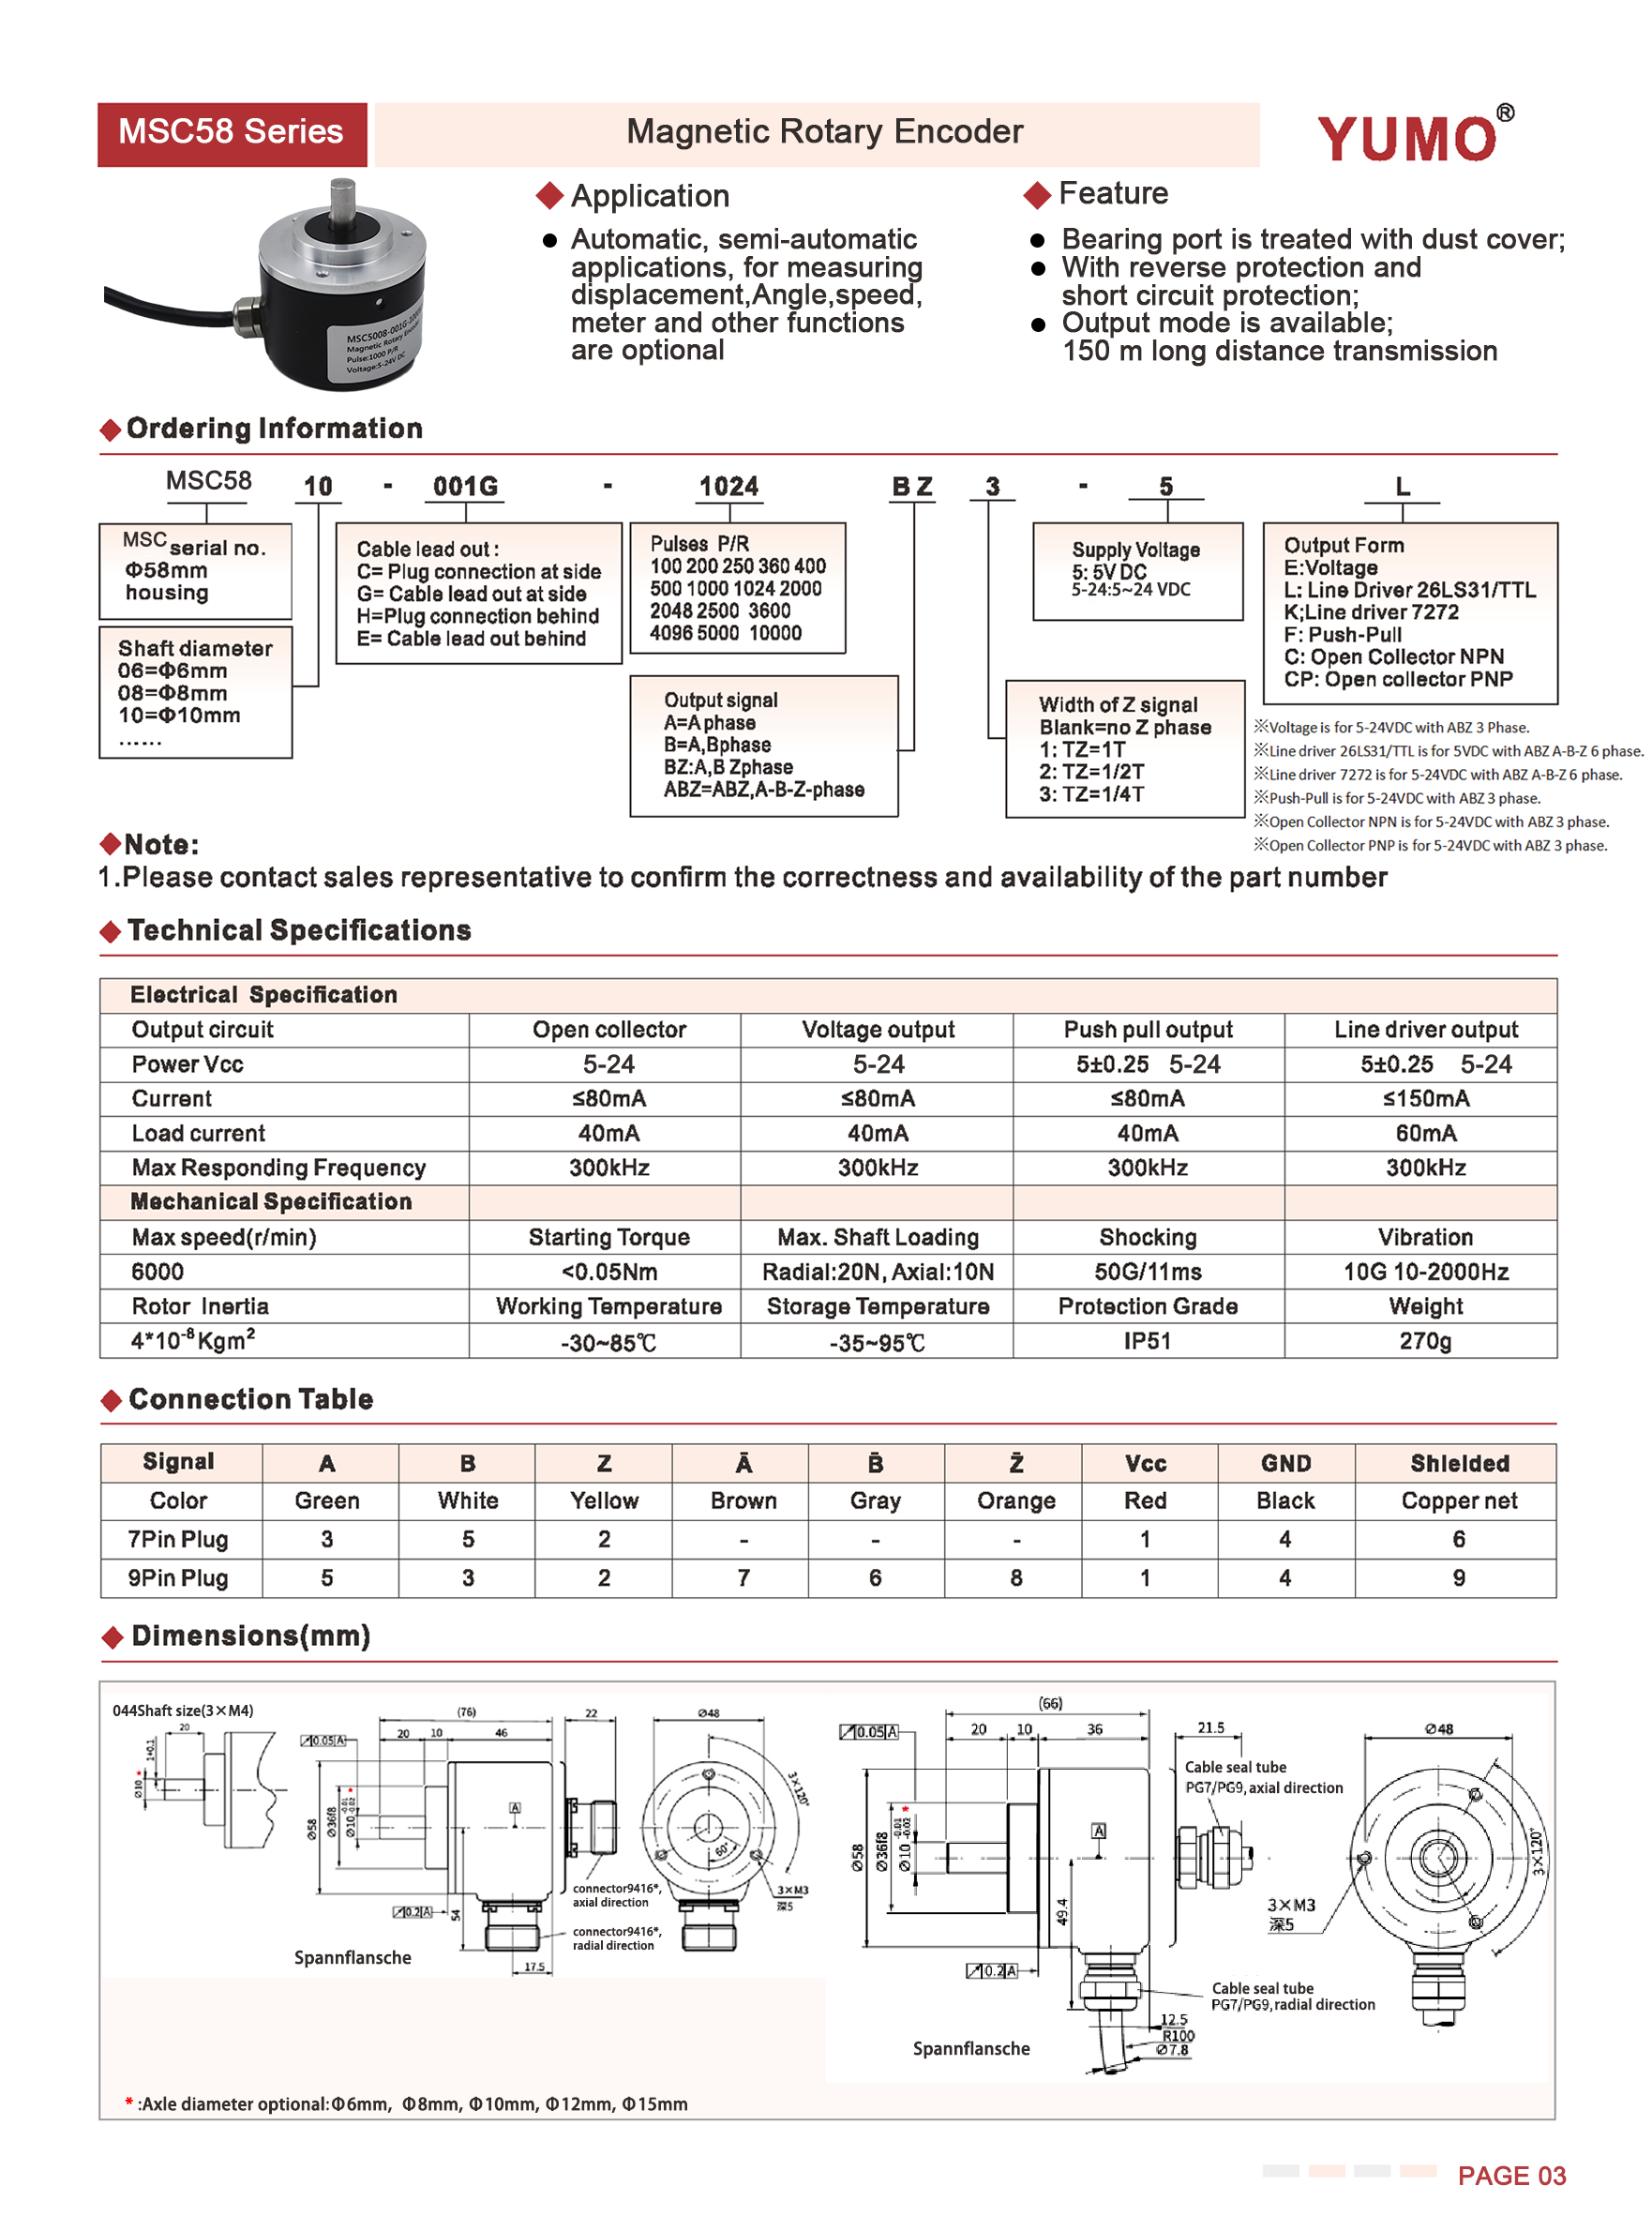 Magnetic Rotary Encoder MSC58